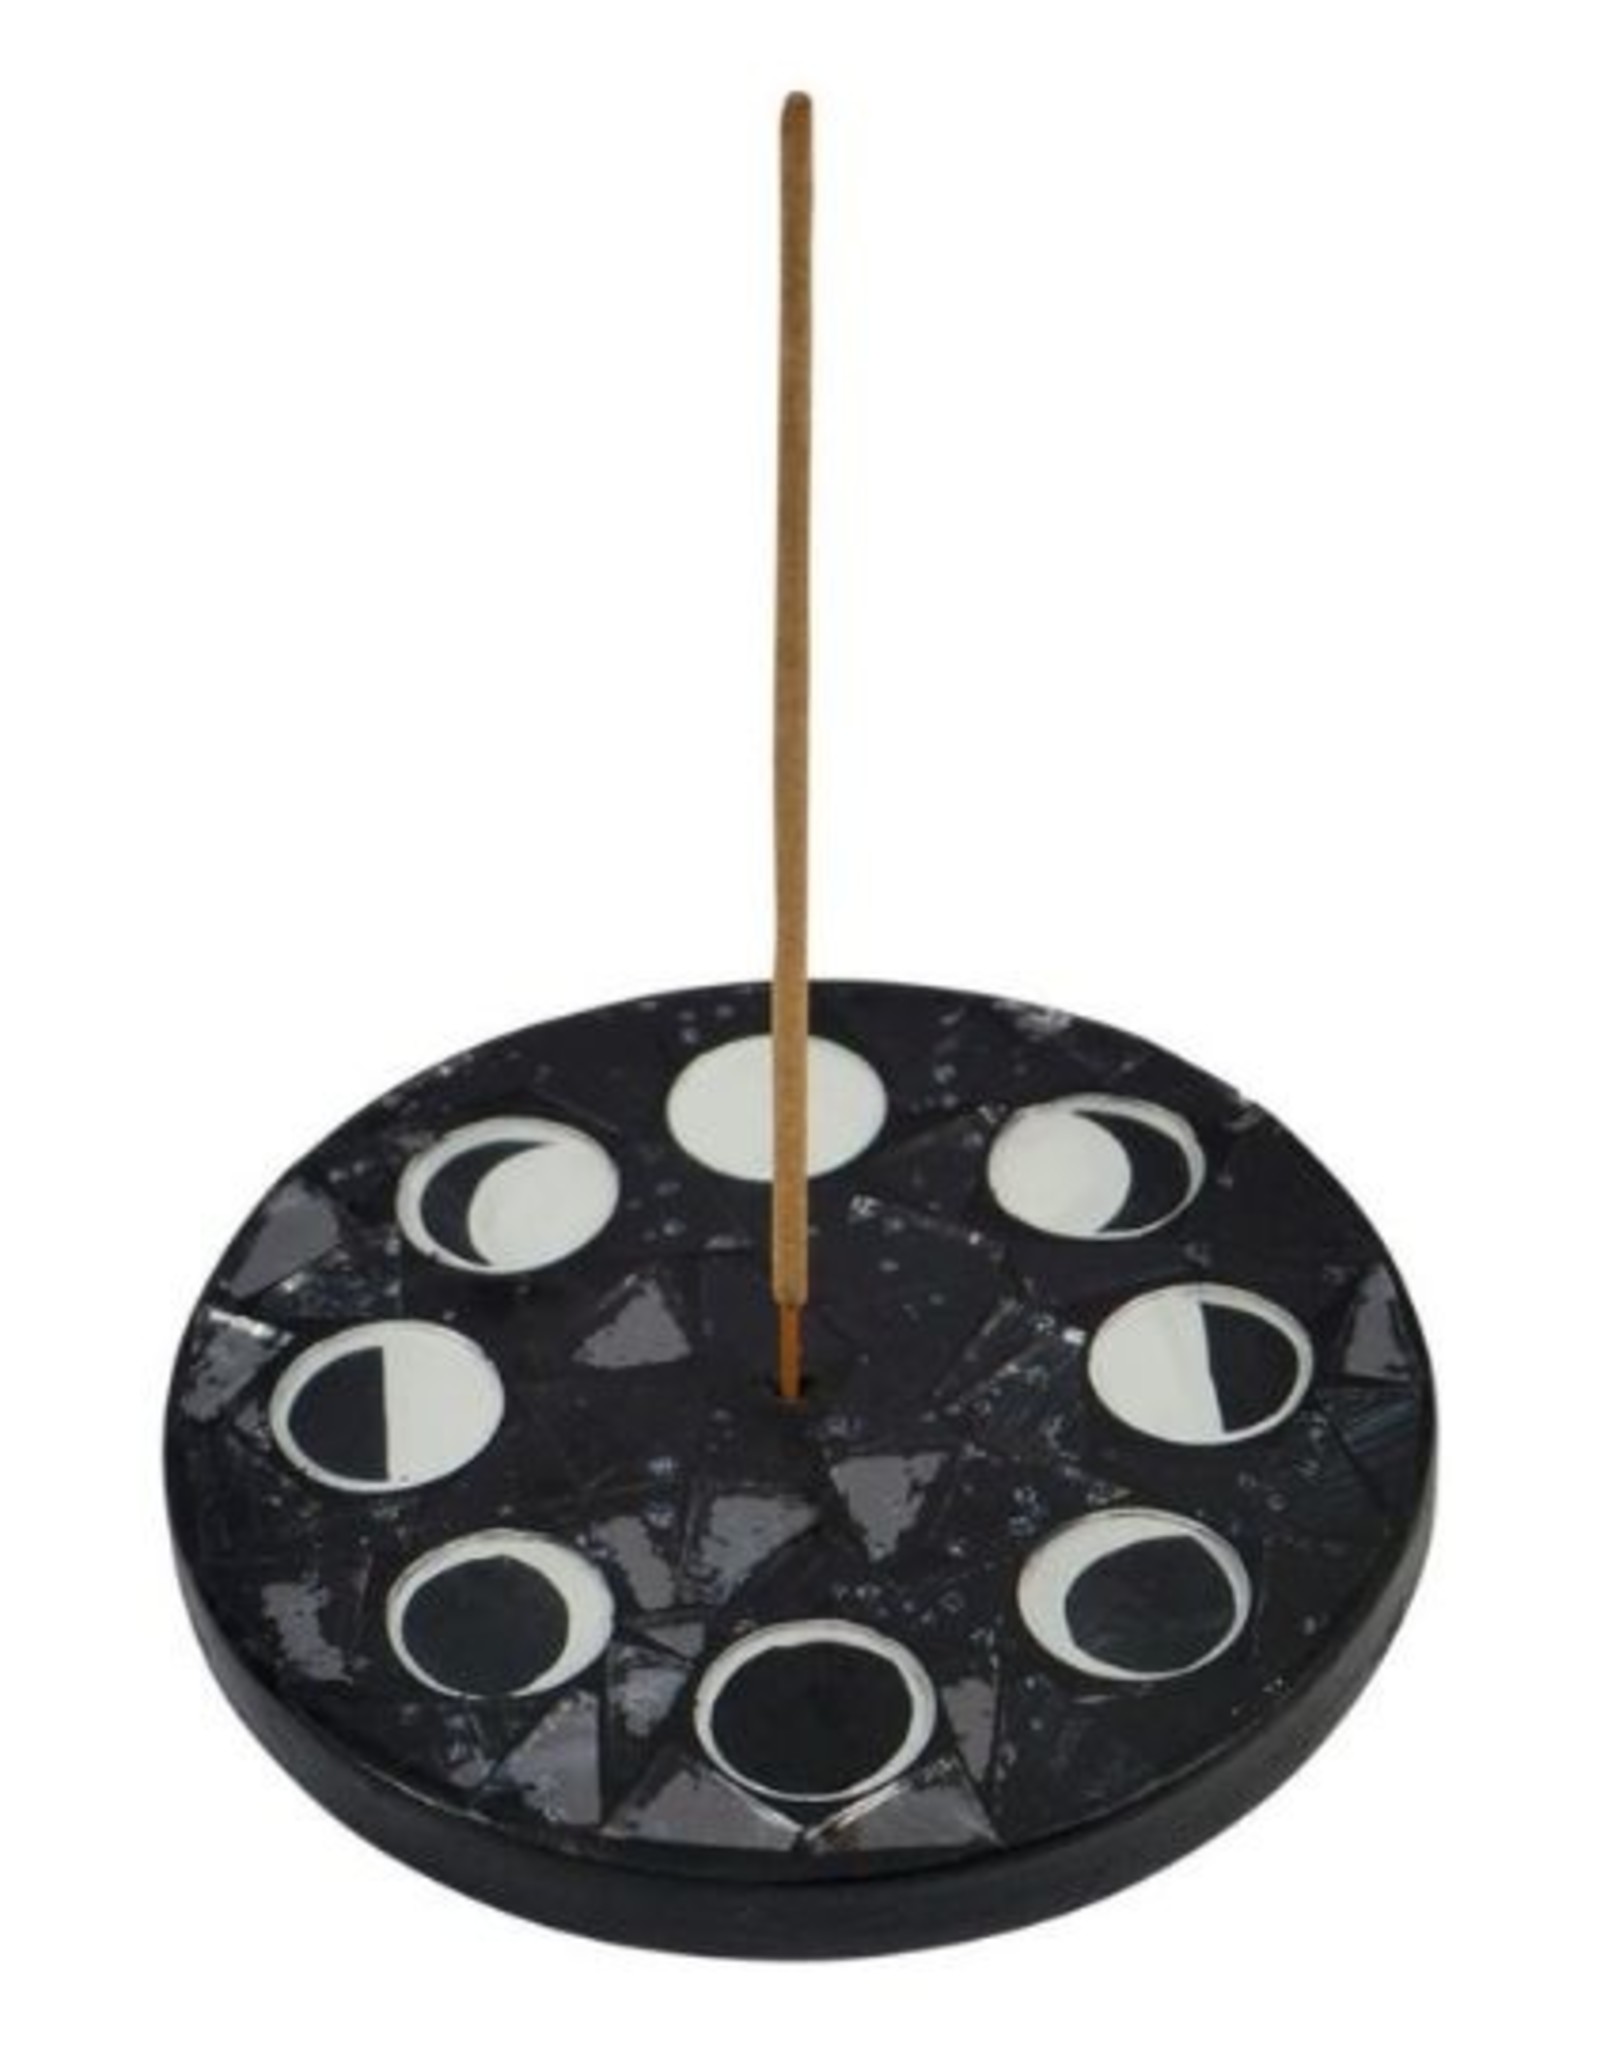 Wood Round Incense Holder - Mosaic Moon Phases Black 4.75"